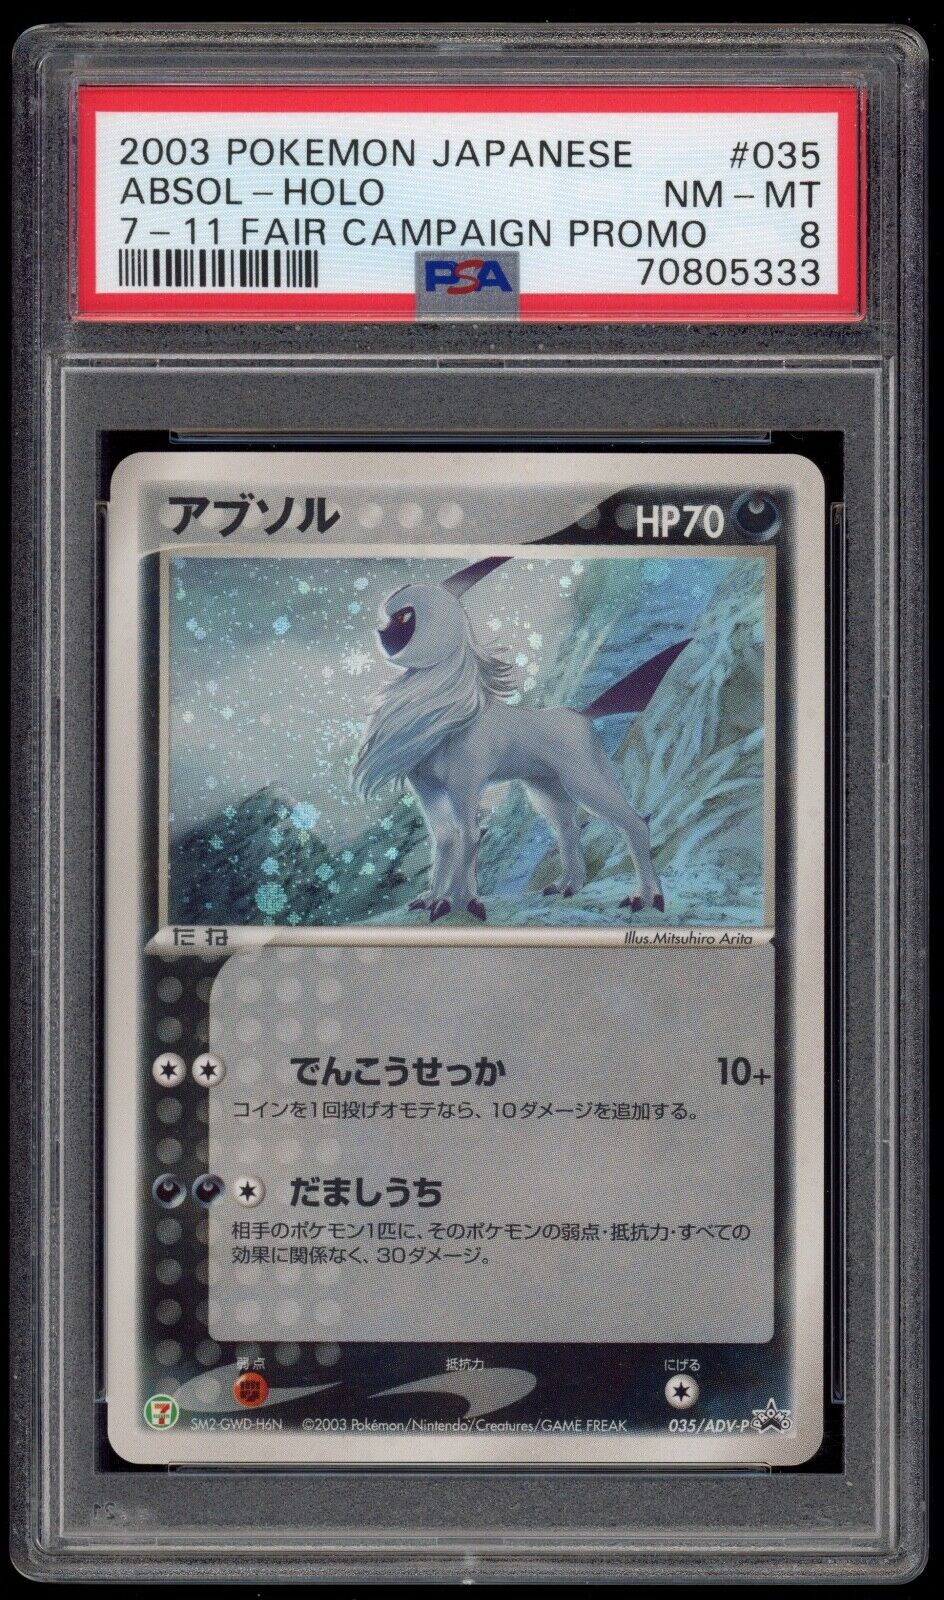 2003 PSA 8 NM-Mint Absol 7-11 Holo Japanese Pokemon Promo Card 035/ADV-P